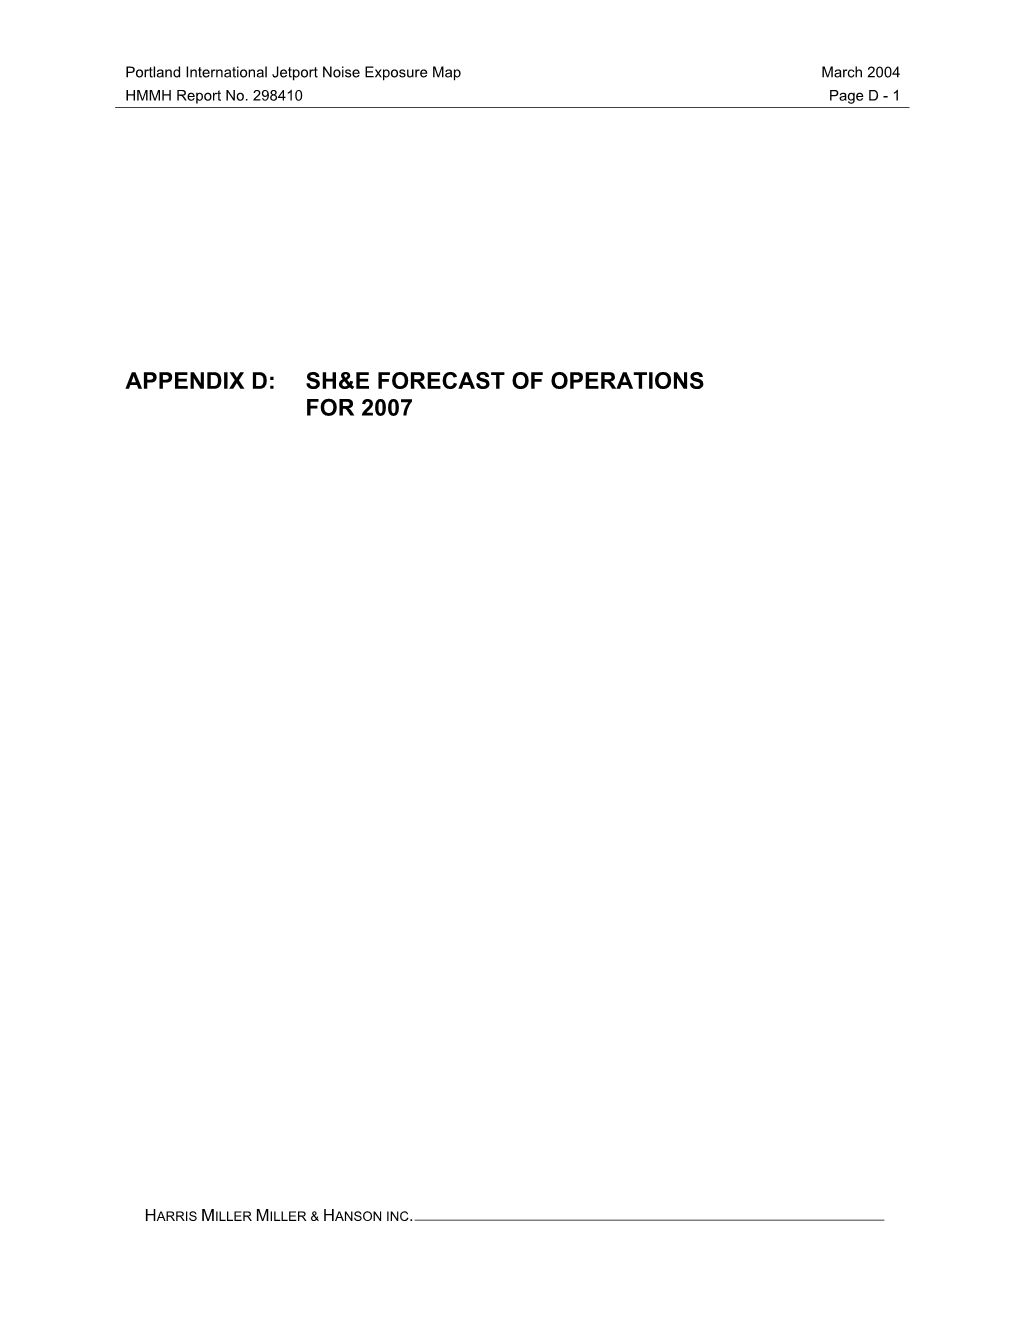 Appendix D: Sh&E Forecast of Operations for 2007